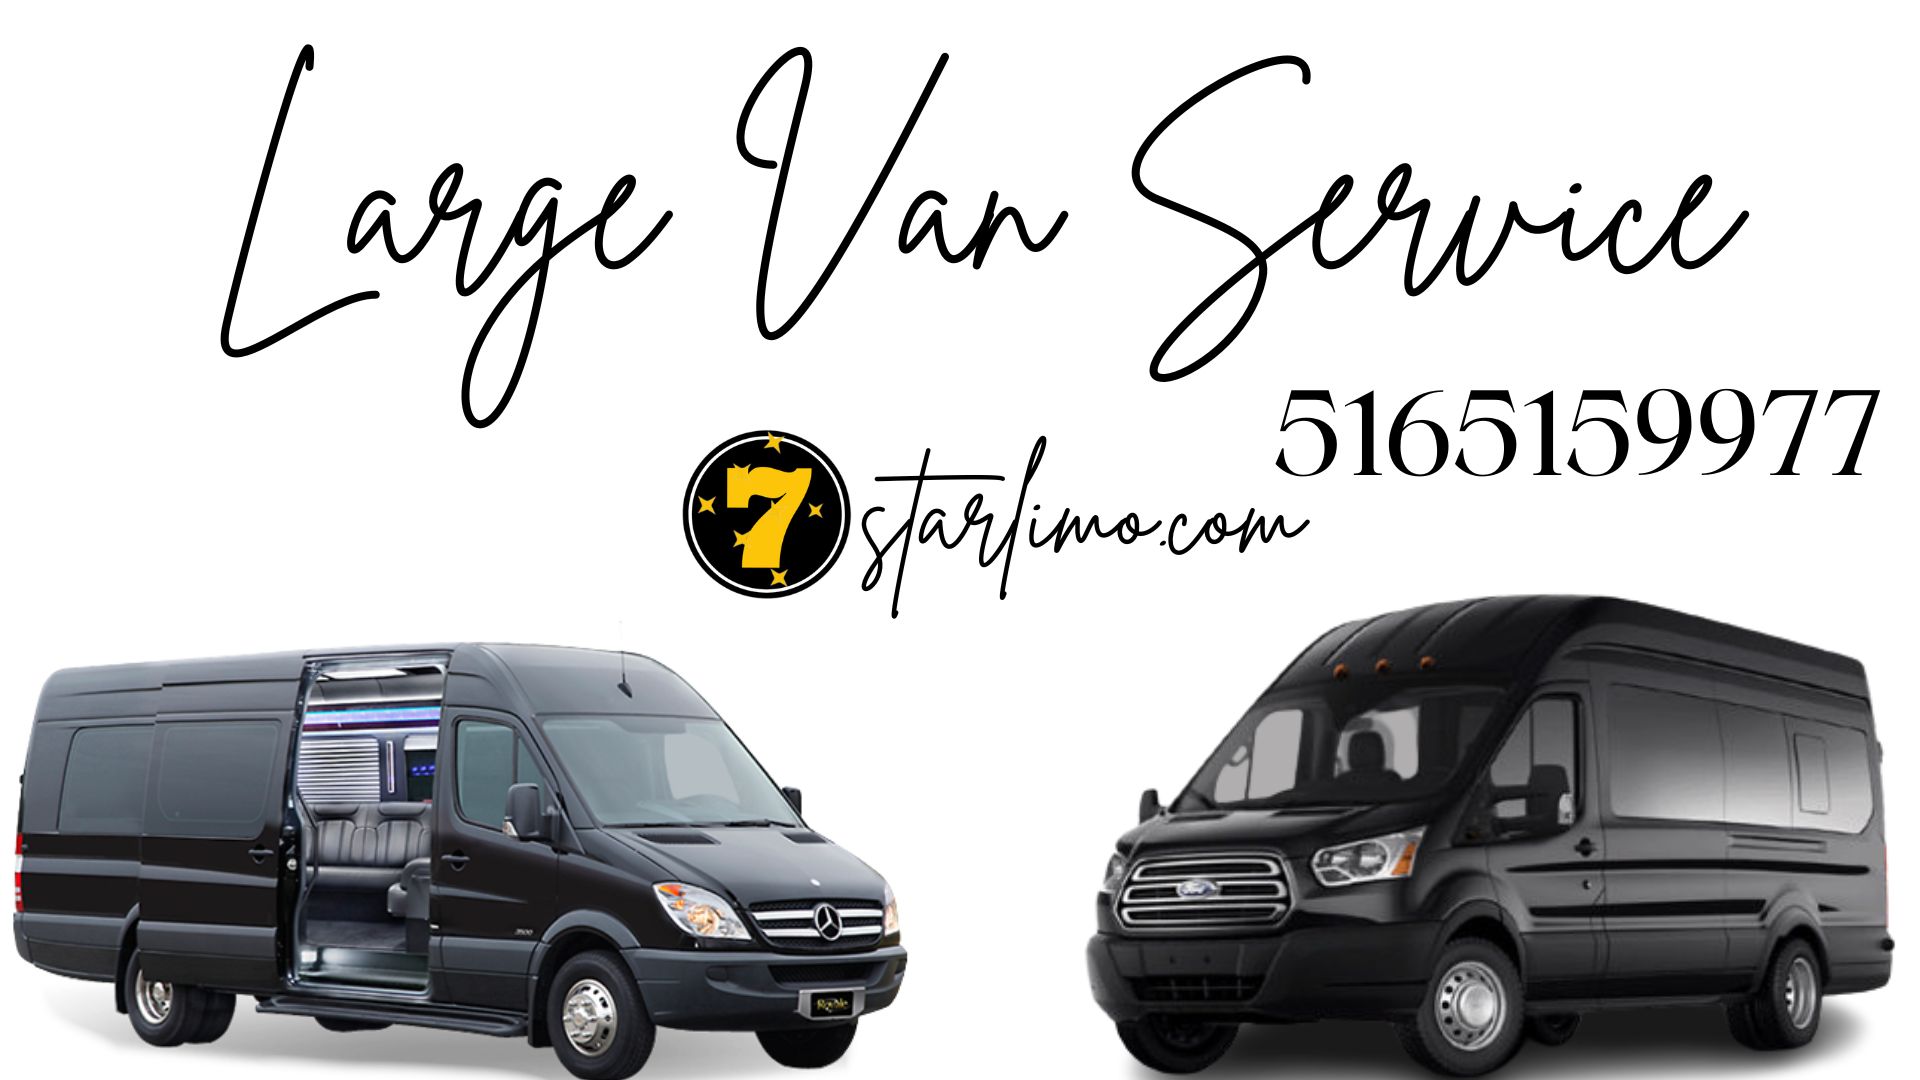 Large Van Service Long Island